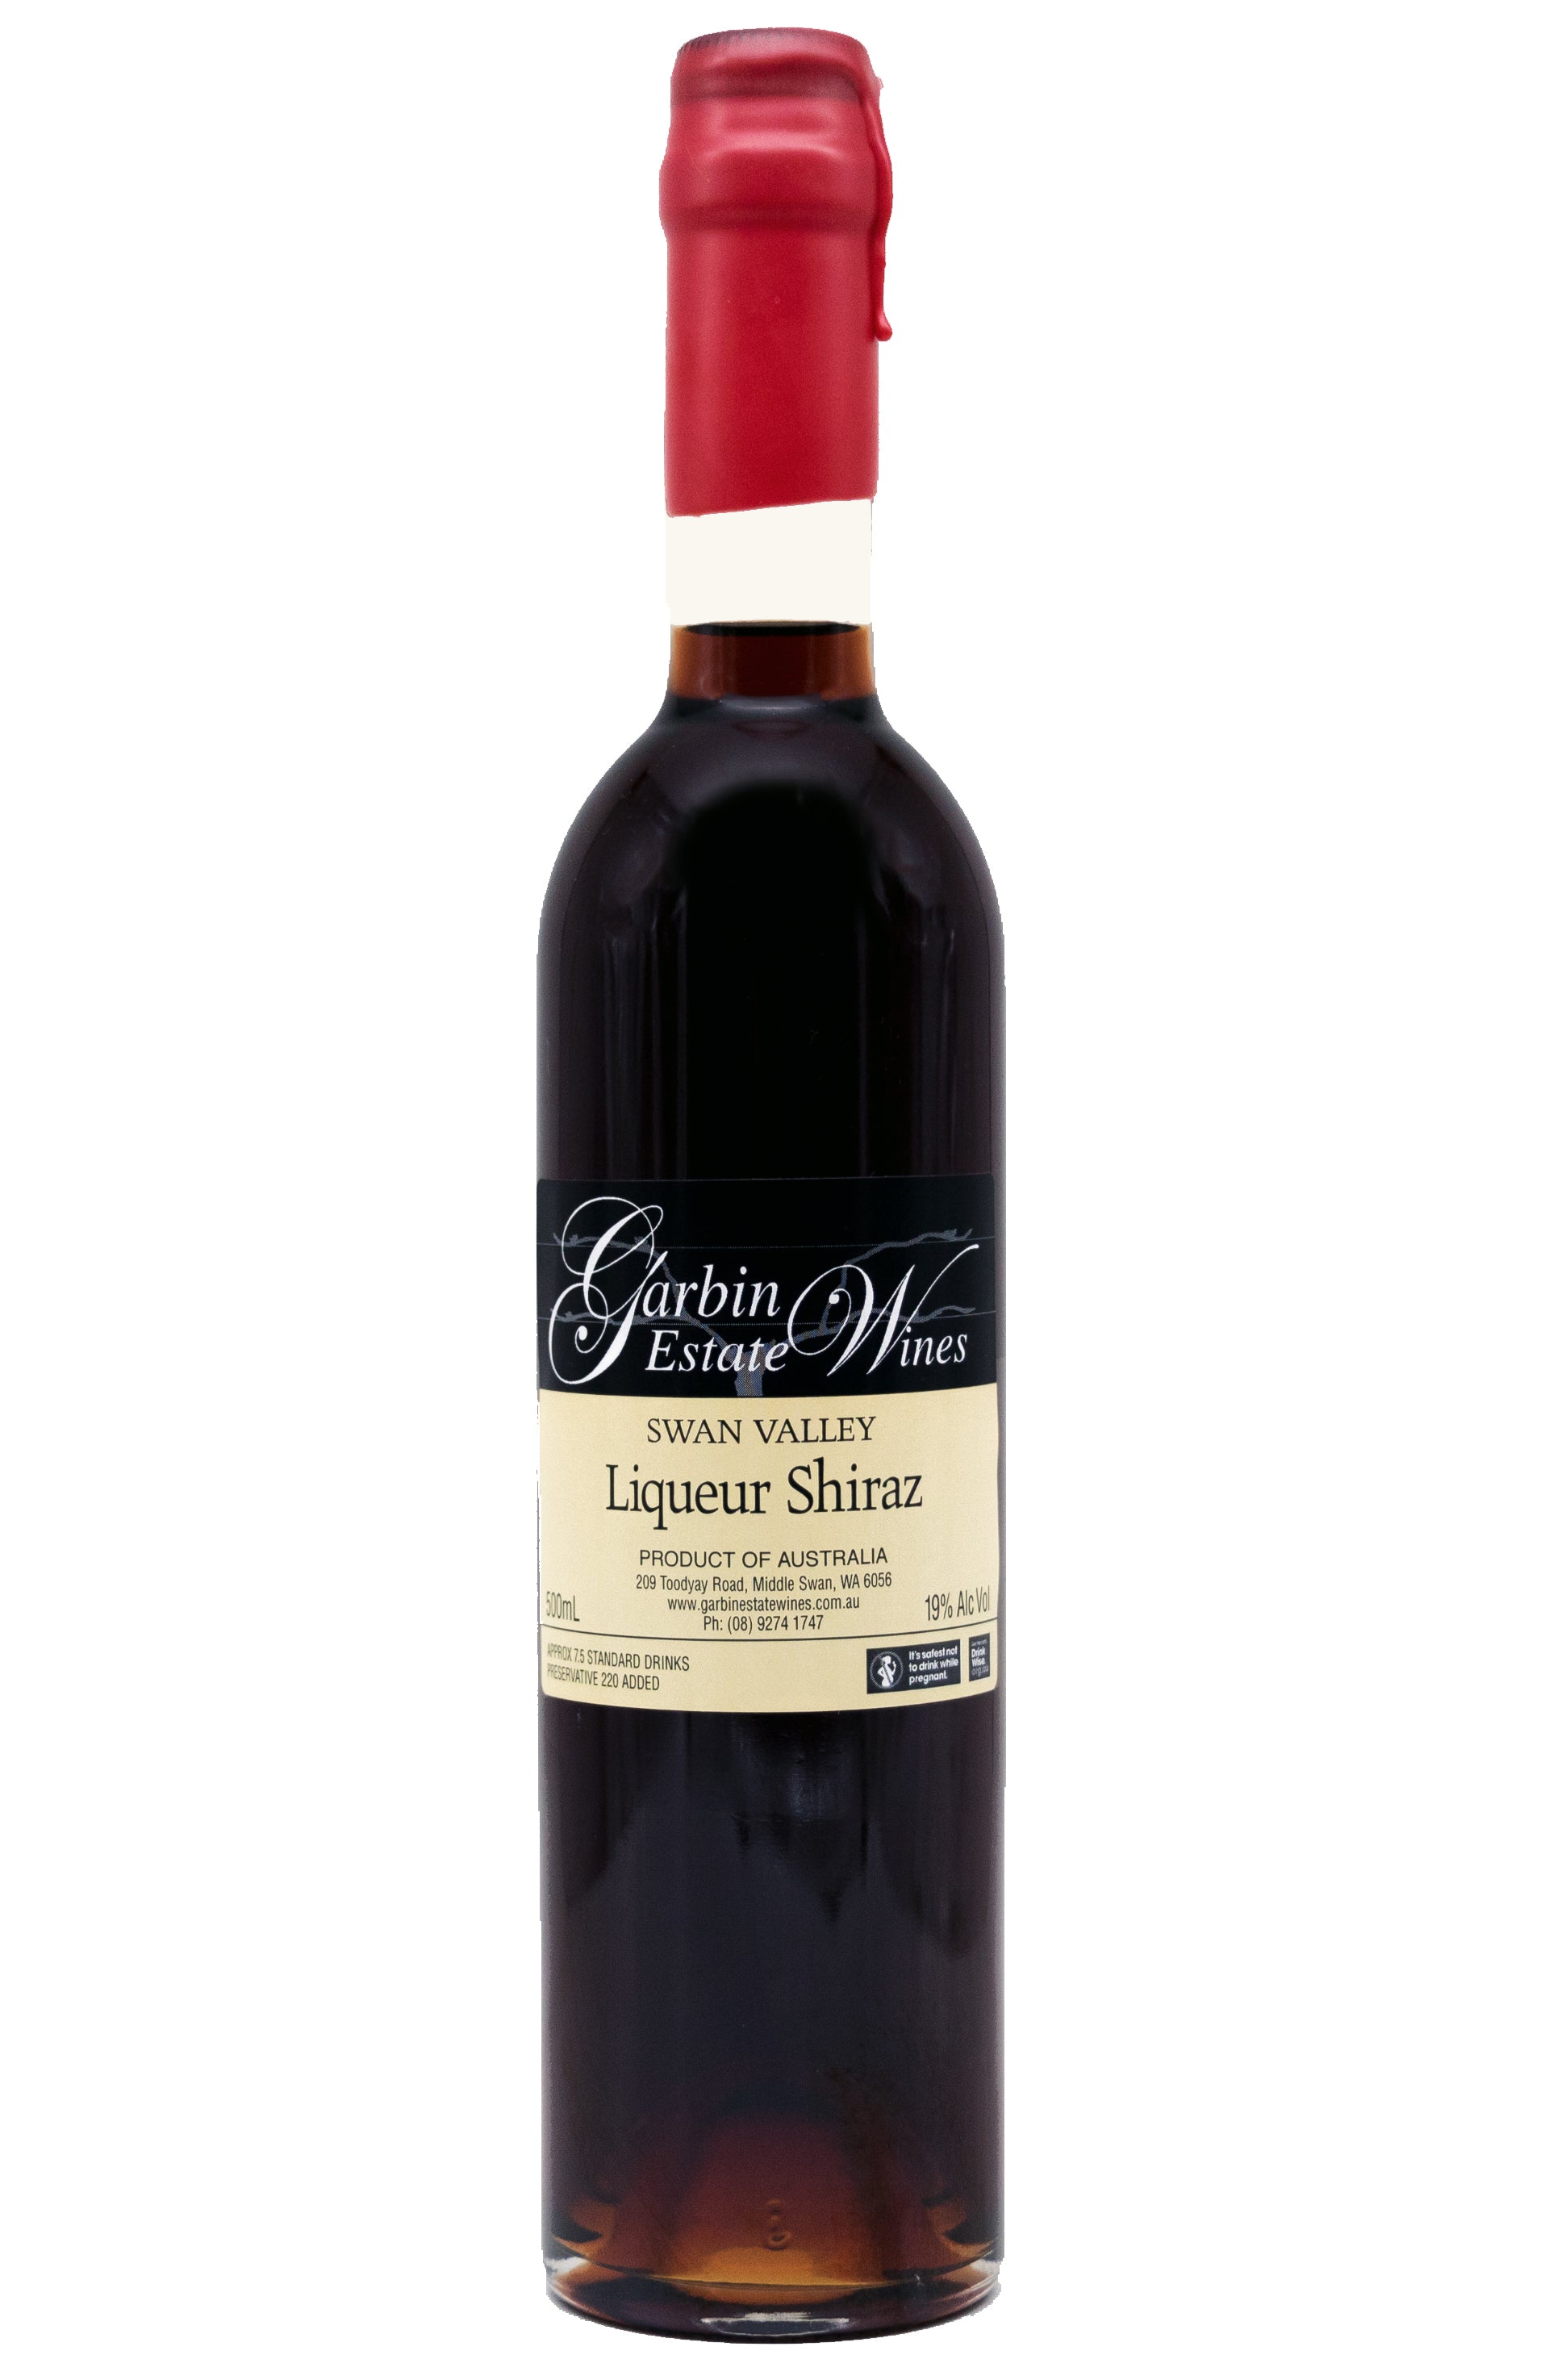 A bottle of Garbin Estate Wines Liqueur Shiraz